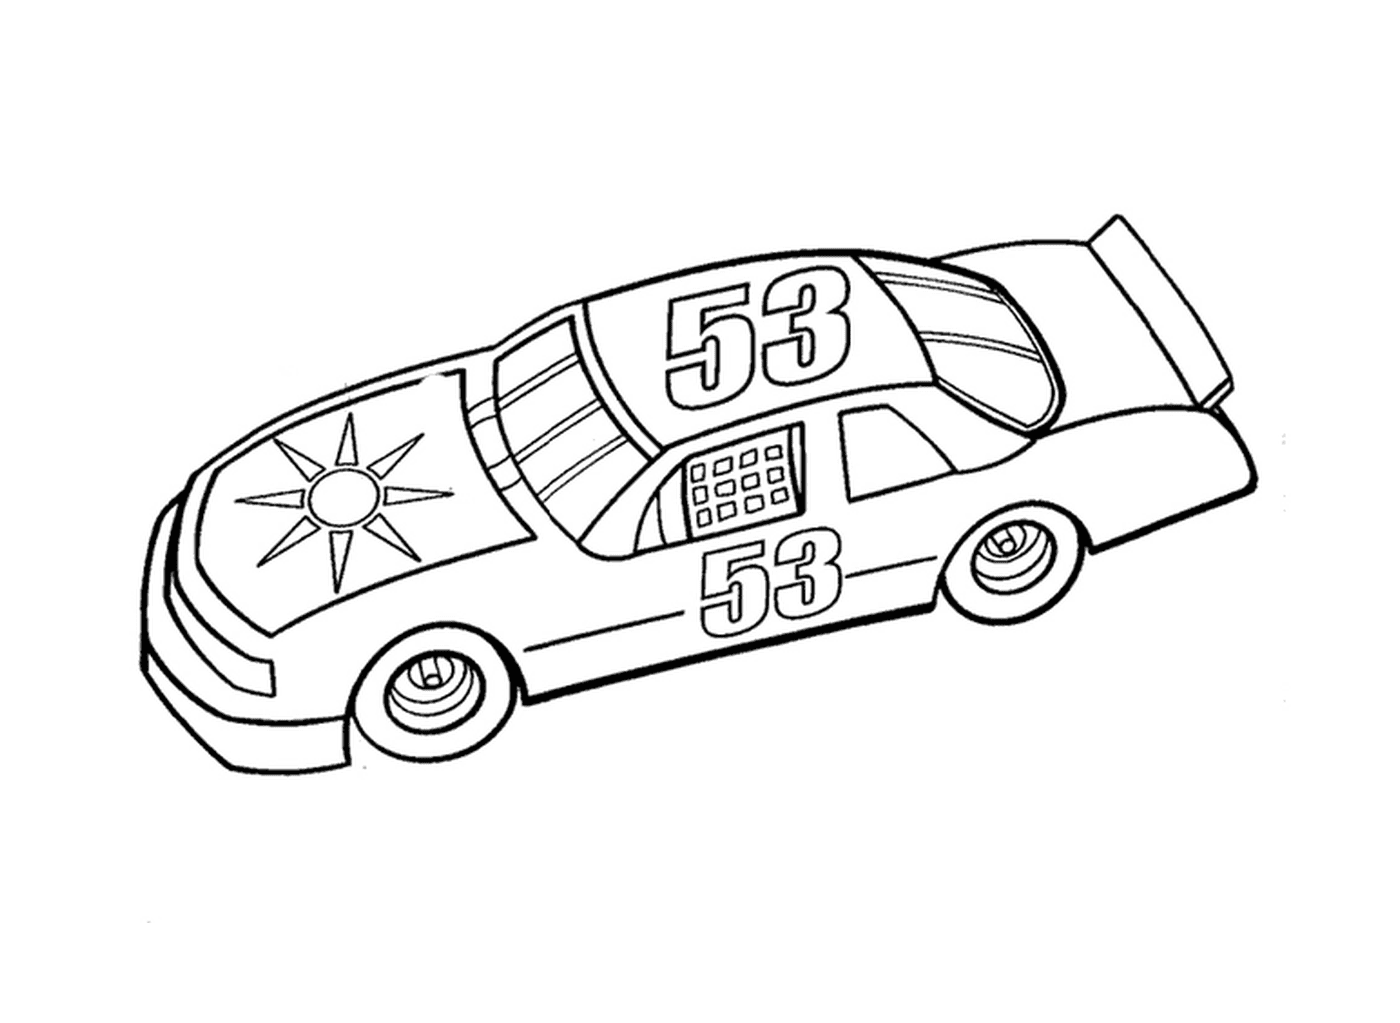  Simple coche deportivo logotipo sol 